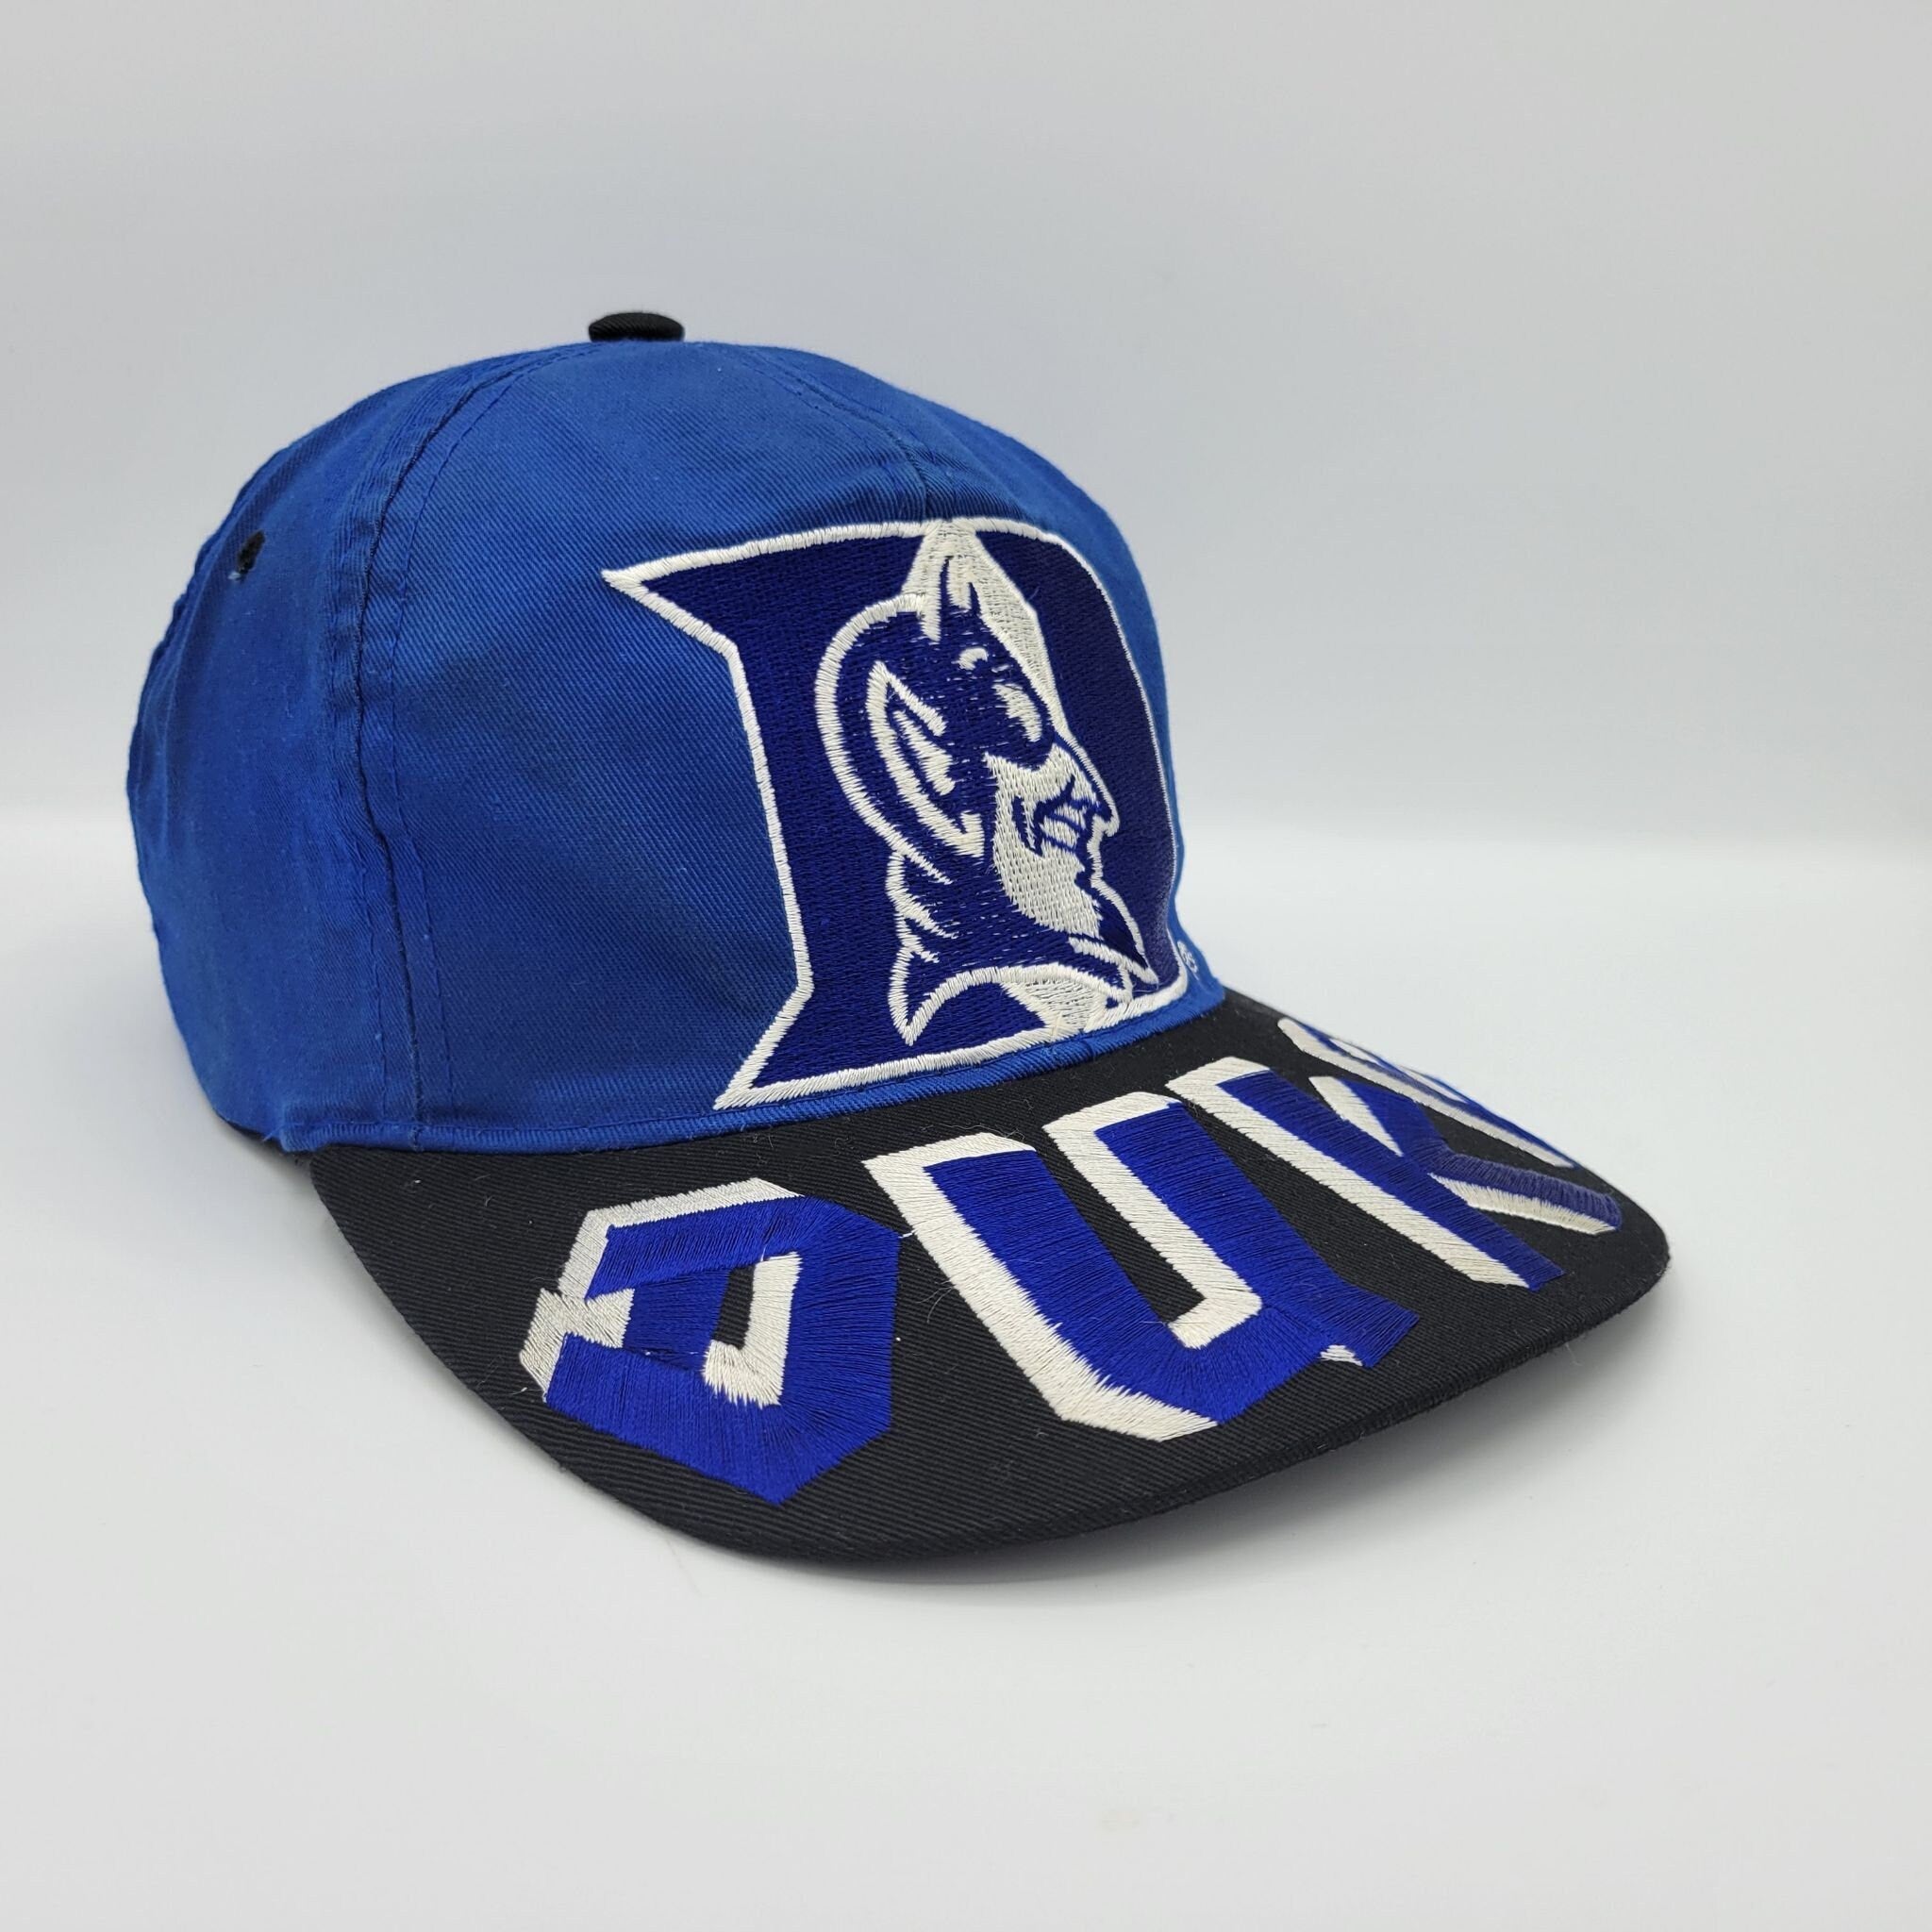 Duke Blue Devils Vintage Snapback Hat for Sale in El Paso, TX - OfferUp